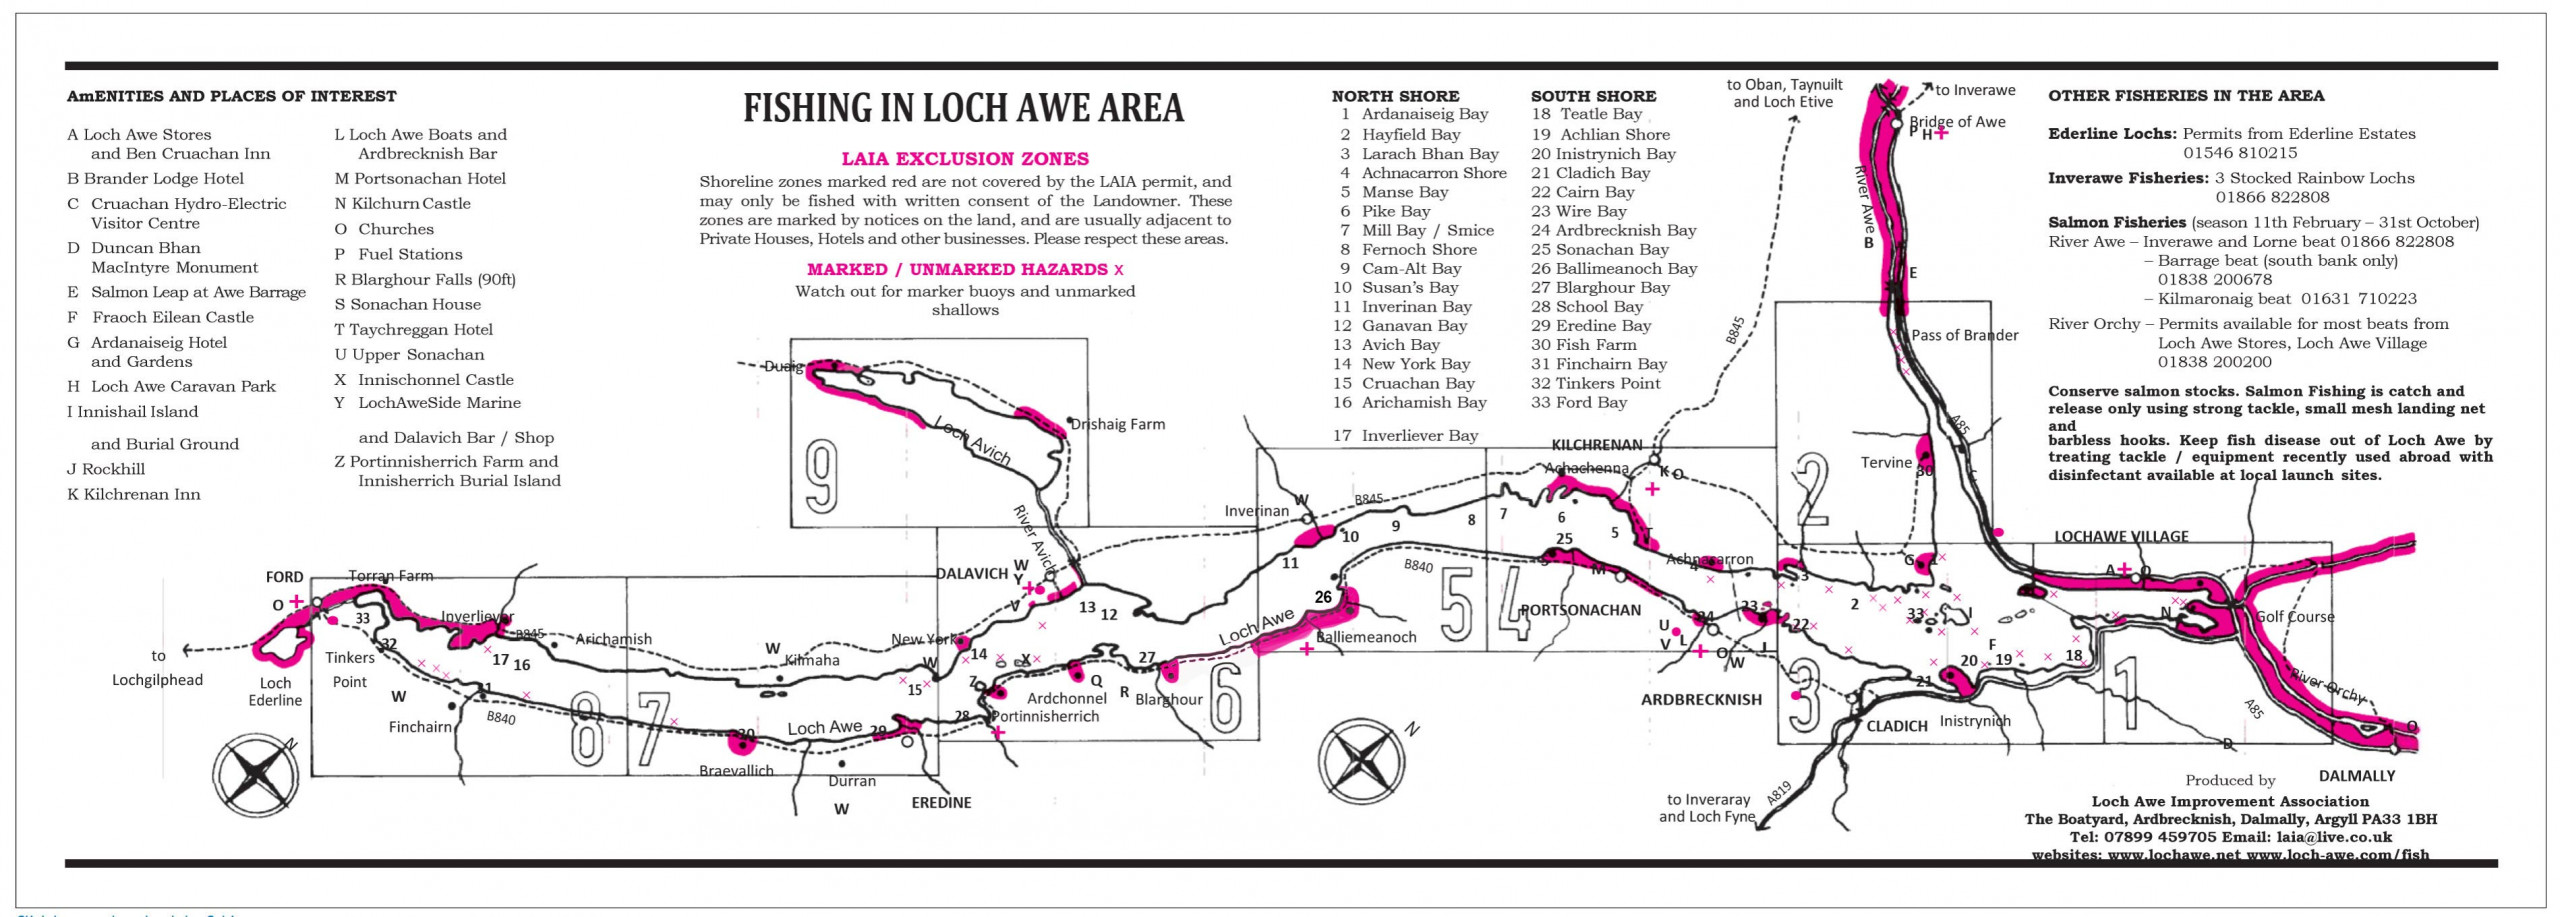 Fishing Map of Loch Awe - Loch Awe Improvement Association (LAIA)